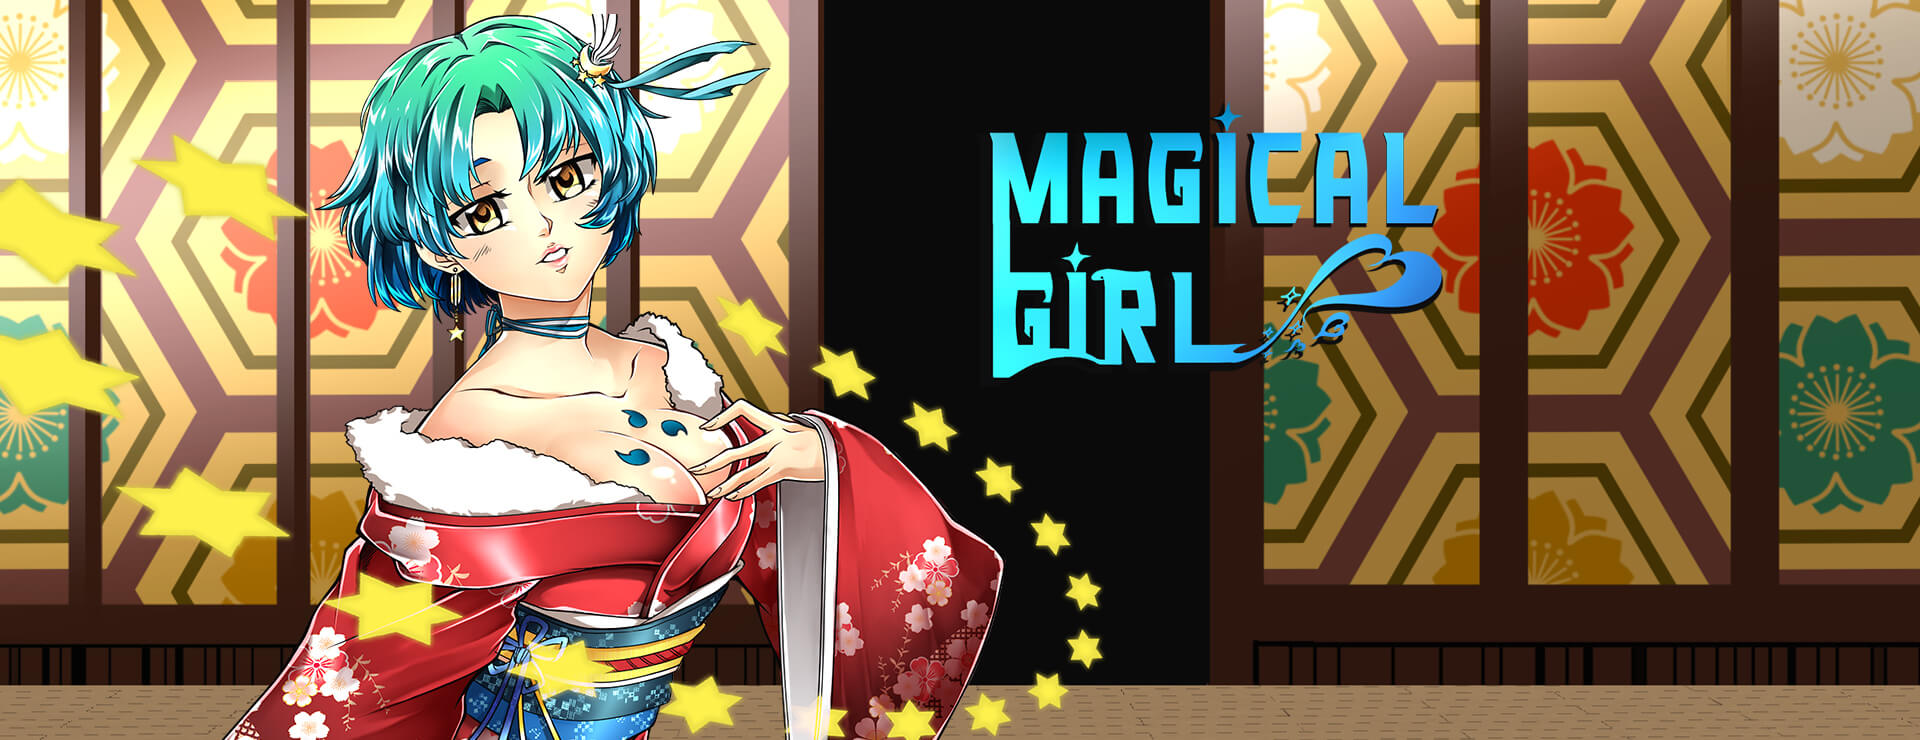 Magical Girl - カジュアル ゲーム